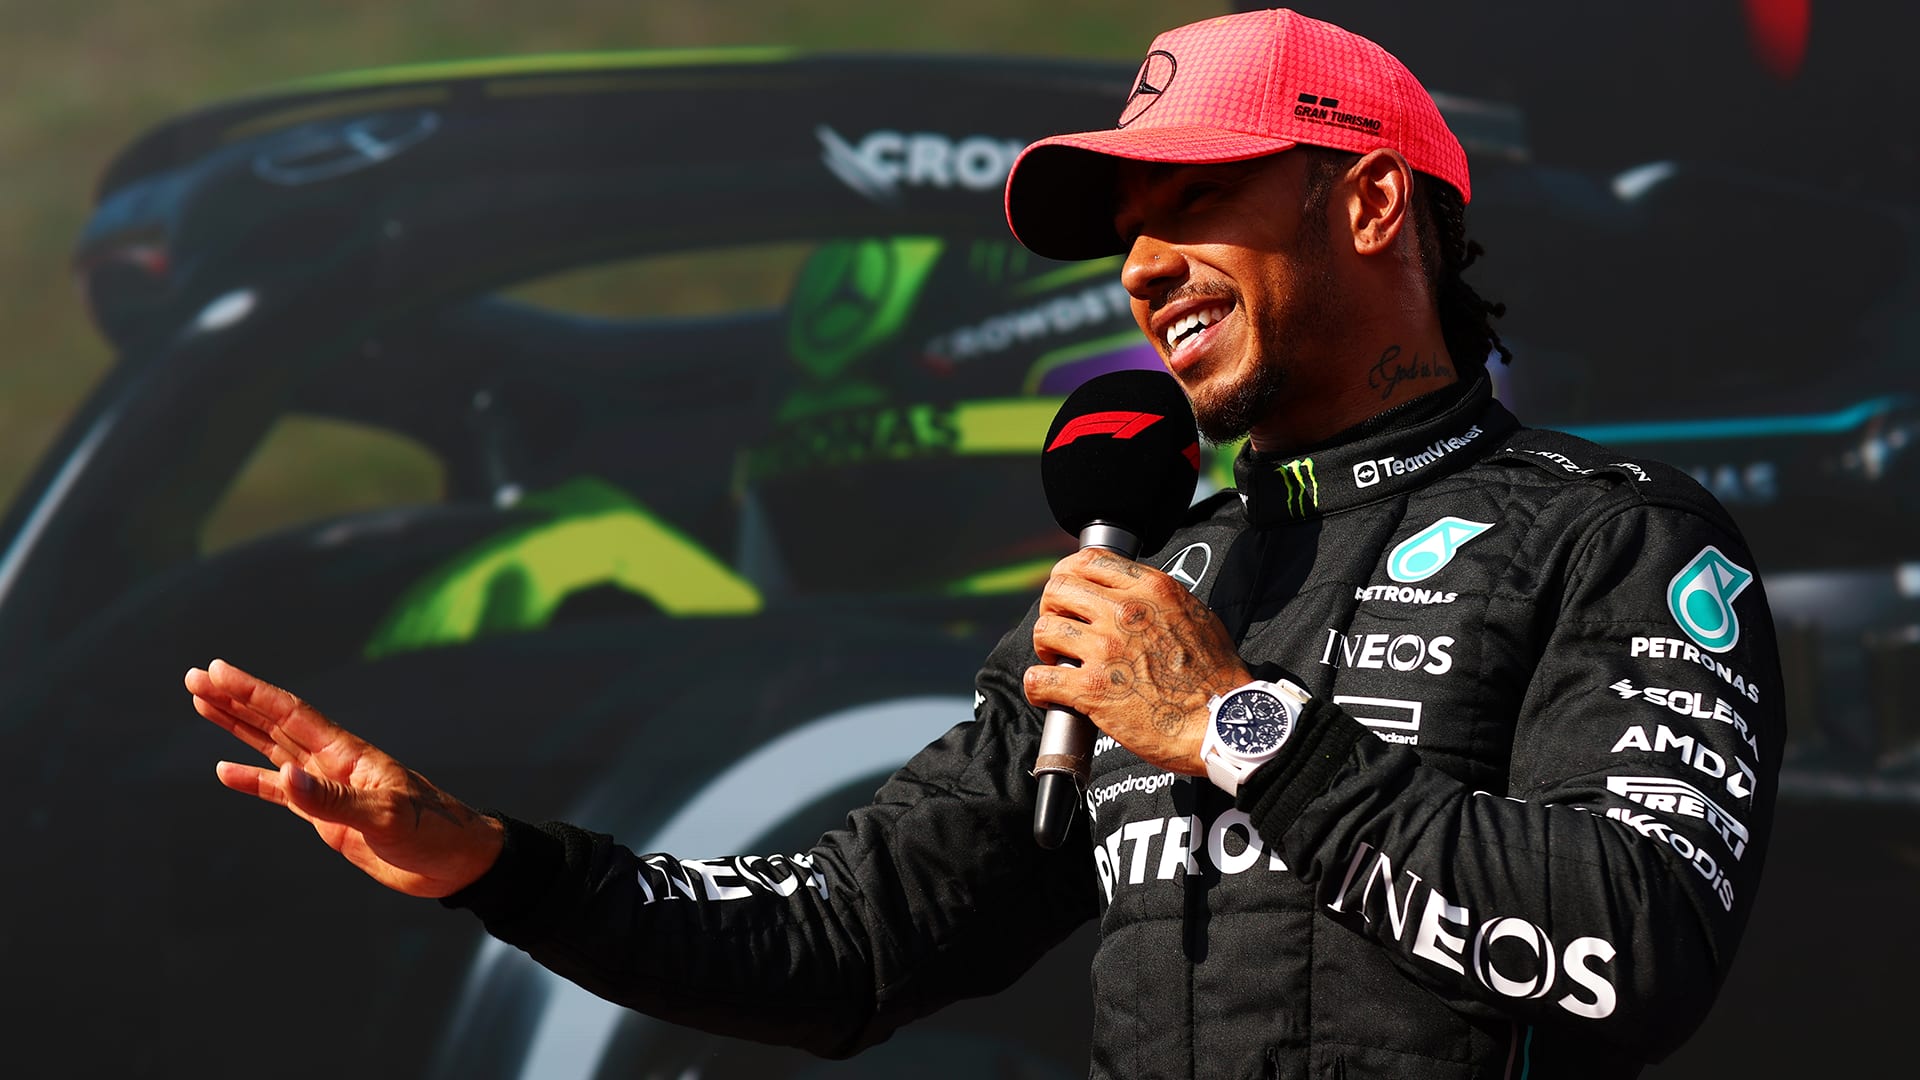 Russell leads home Hamilton for breakthrough Sao Paulo GP win